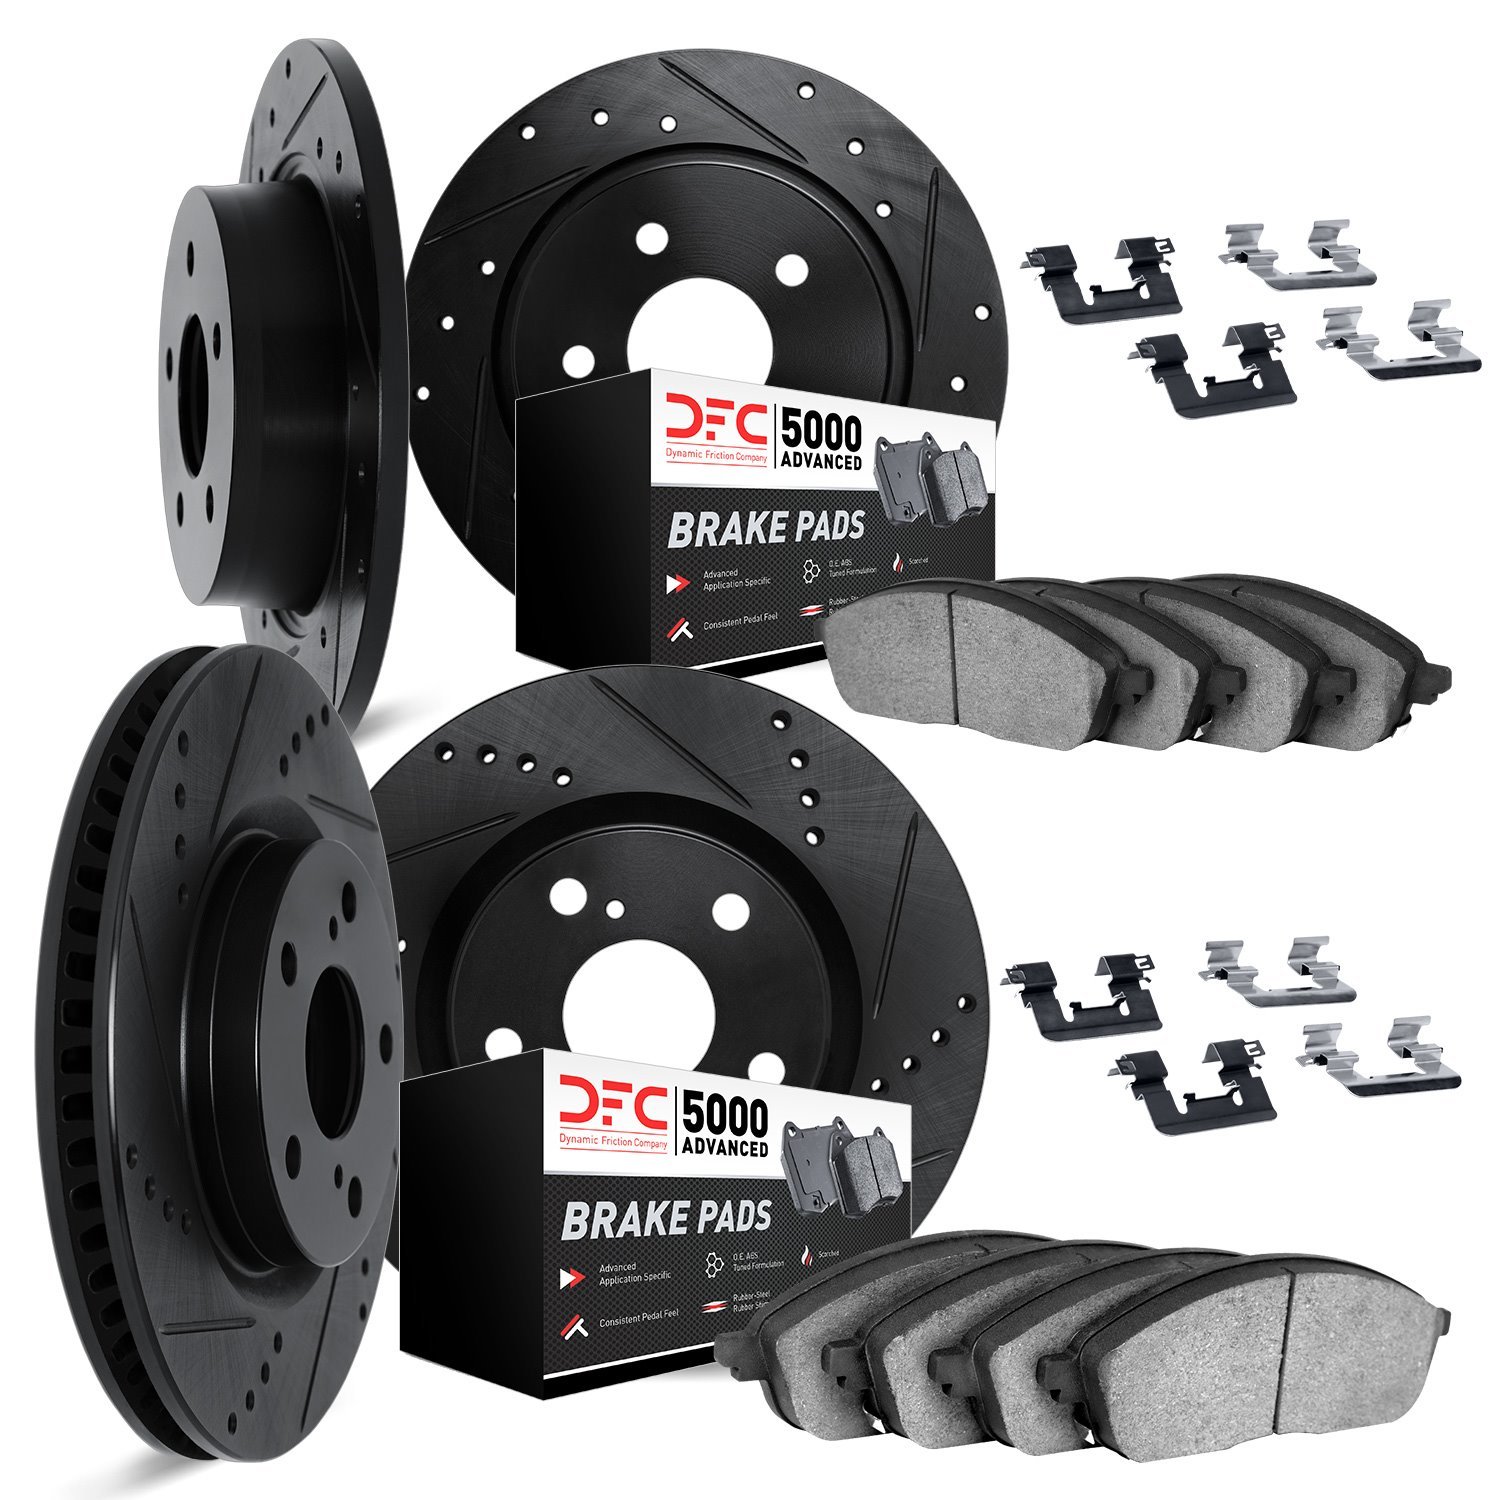 8514-21012 Drilled/Slotted Brake Rotors w/5000 Advanced Brake Pads Kit & Hardware [Black], Fits Select Kia/Hyundai/Genesis, Posi